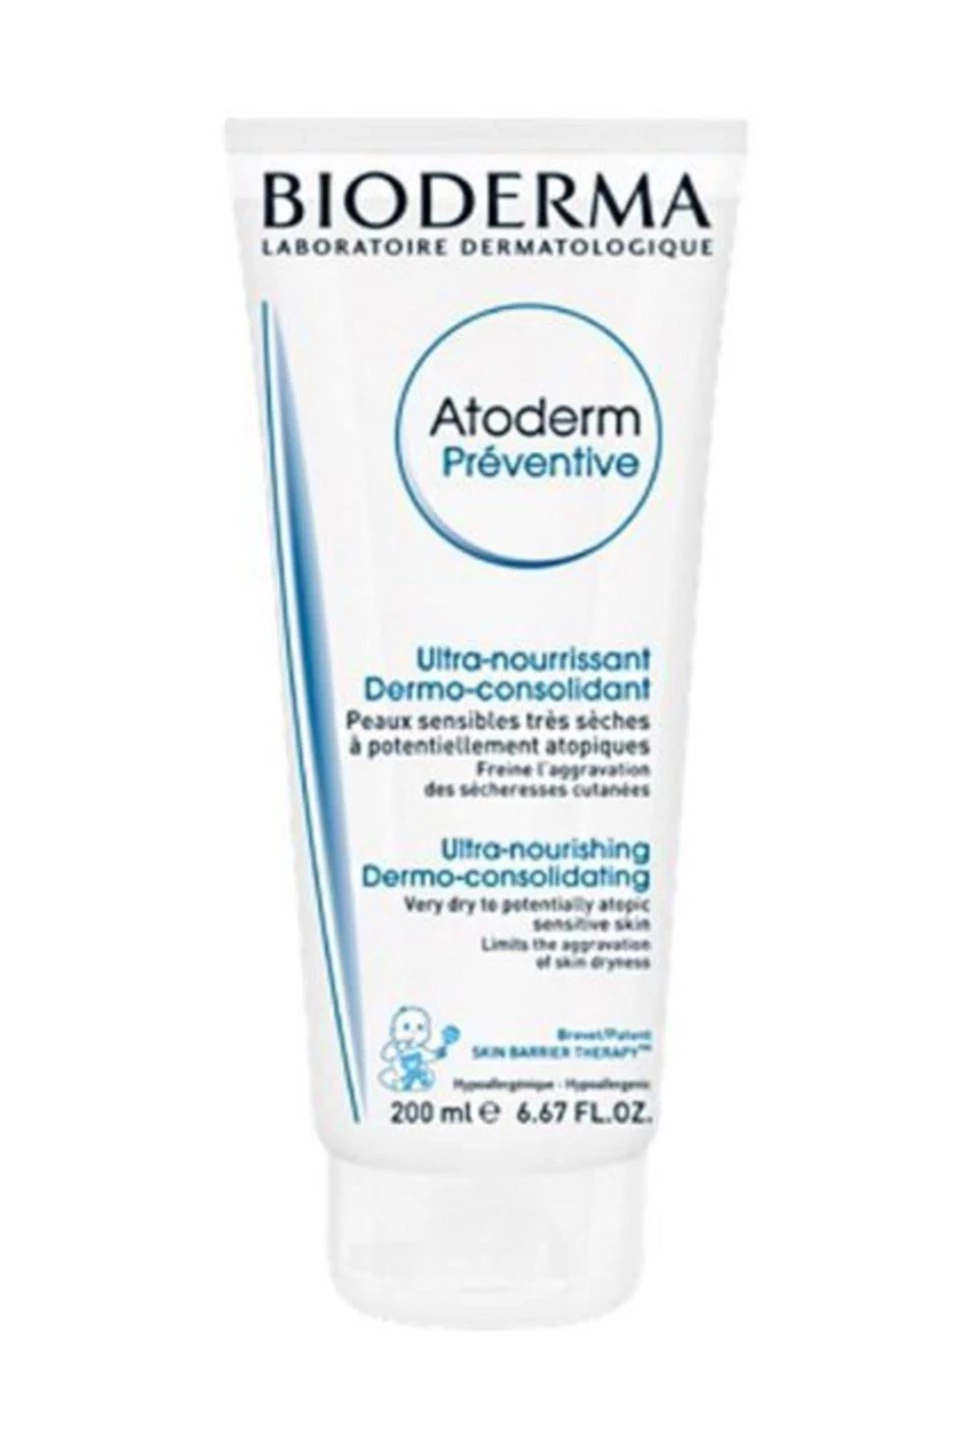 Bioderma Atoderm Preventive Nourishing Cream 200 ml